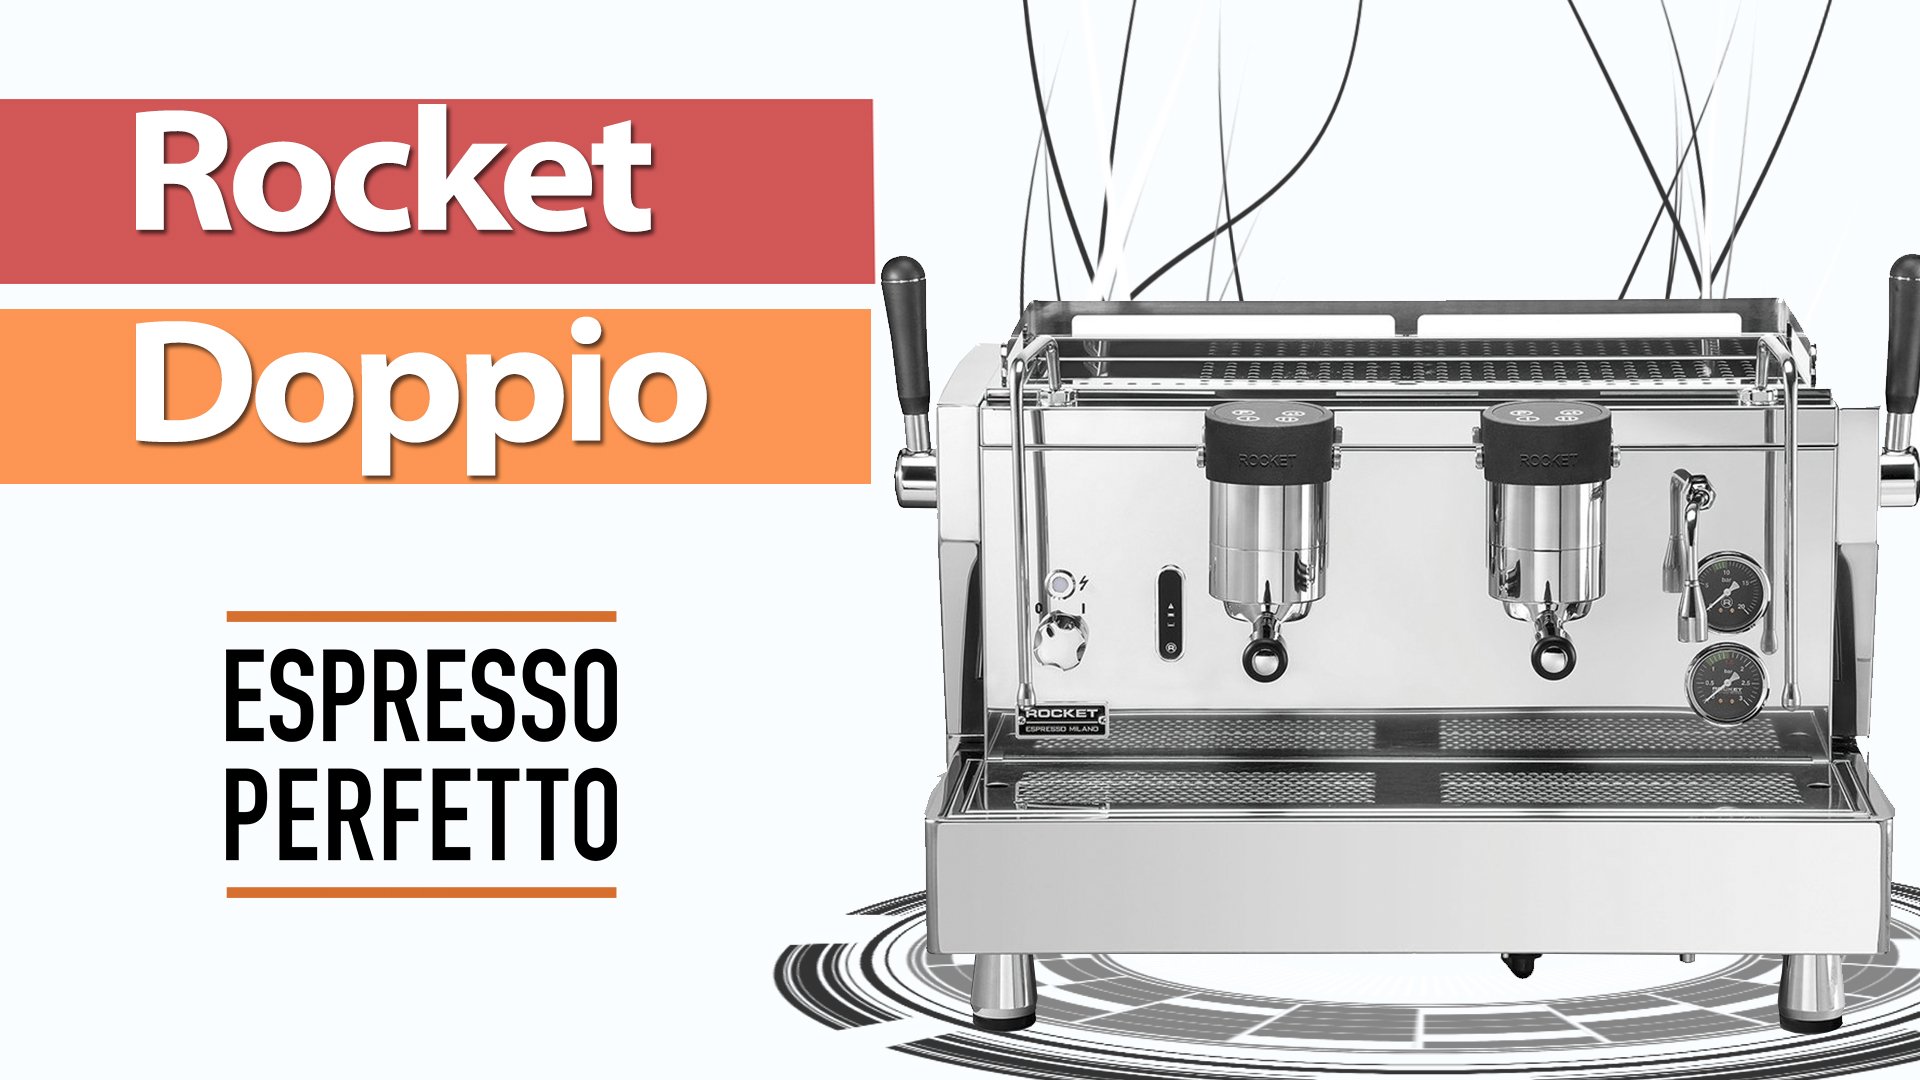 Rocket Doppio Kafe için Espresso Makinesi